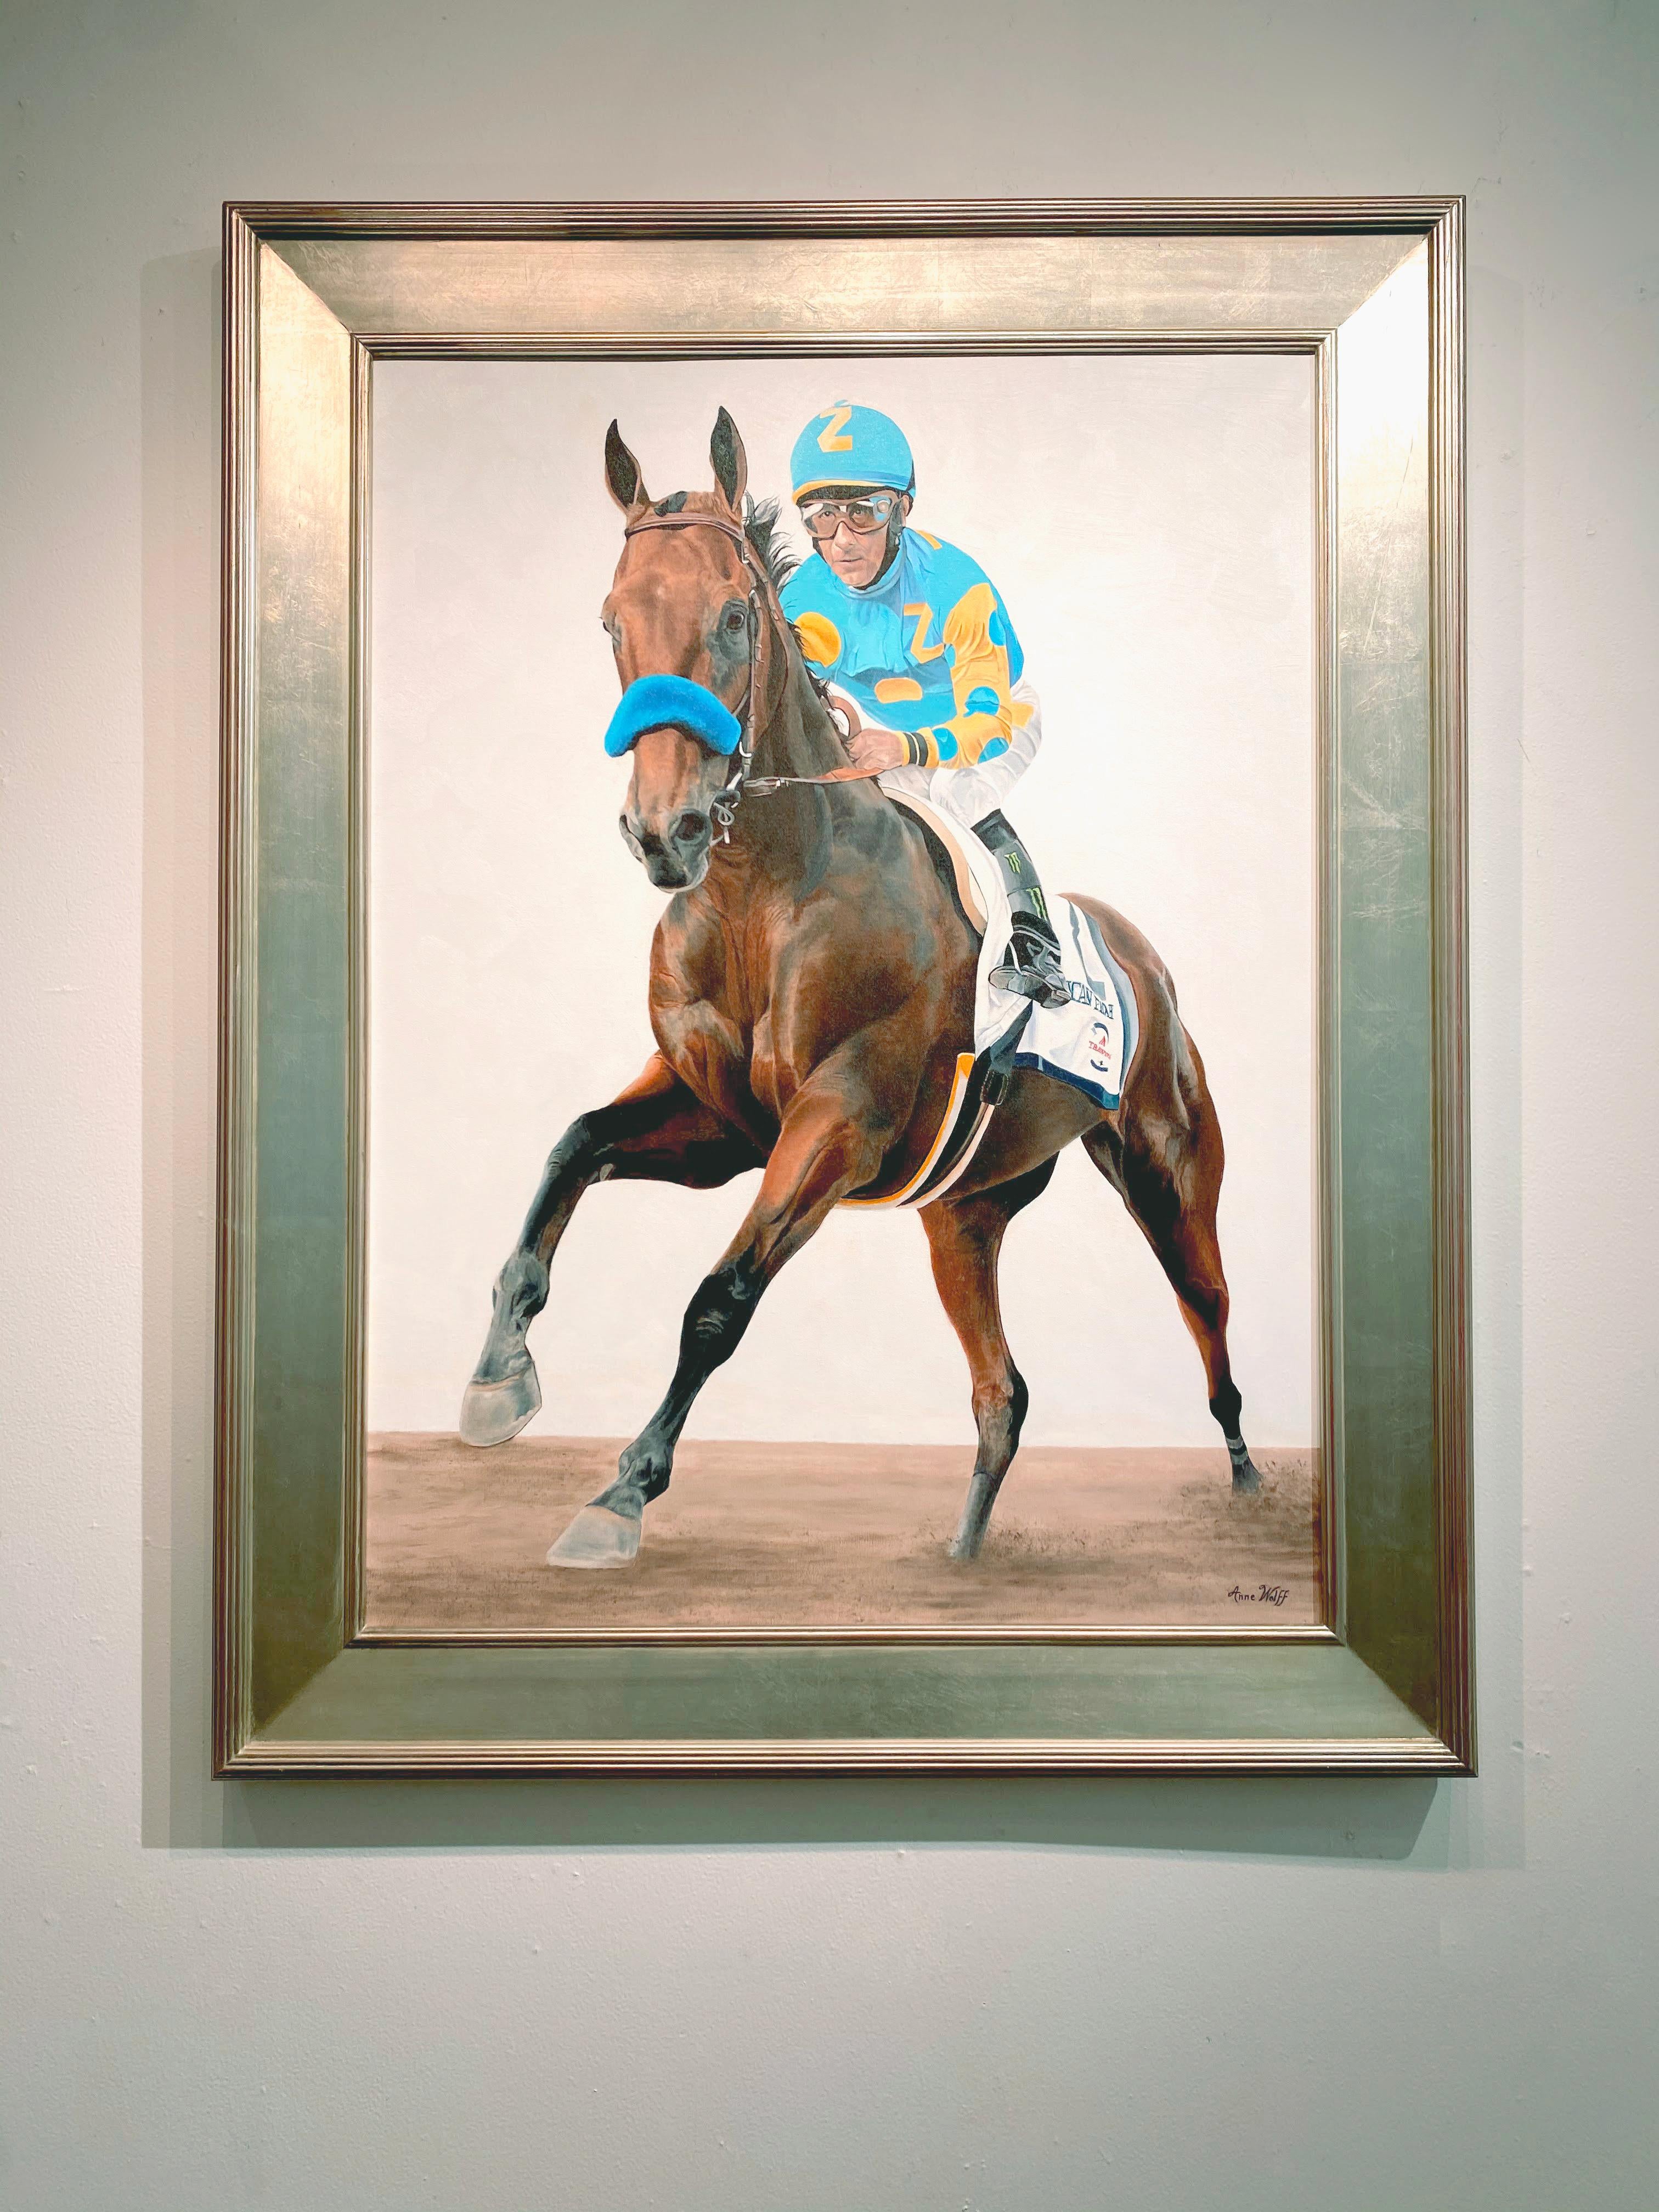 This equine racing portrait 